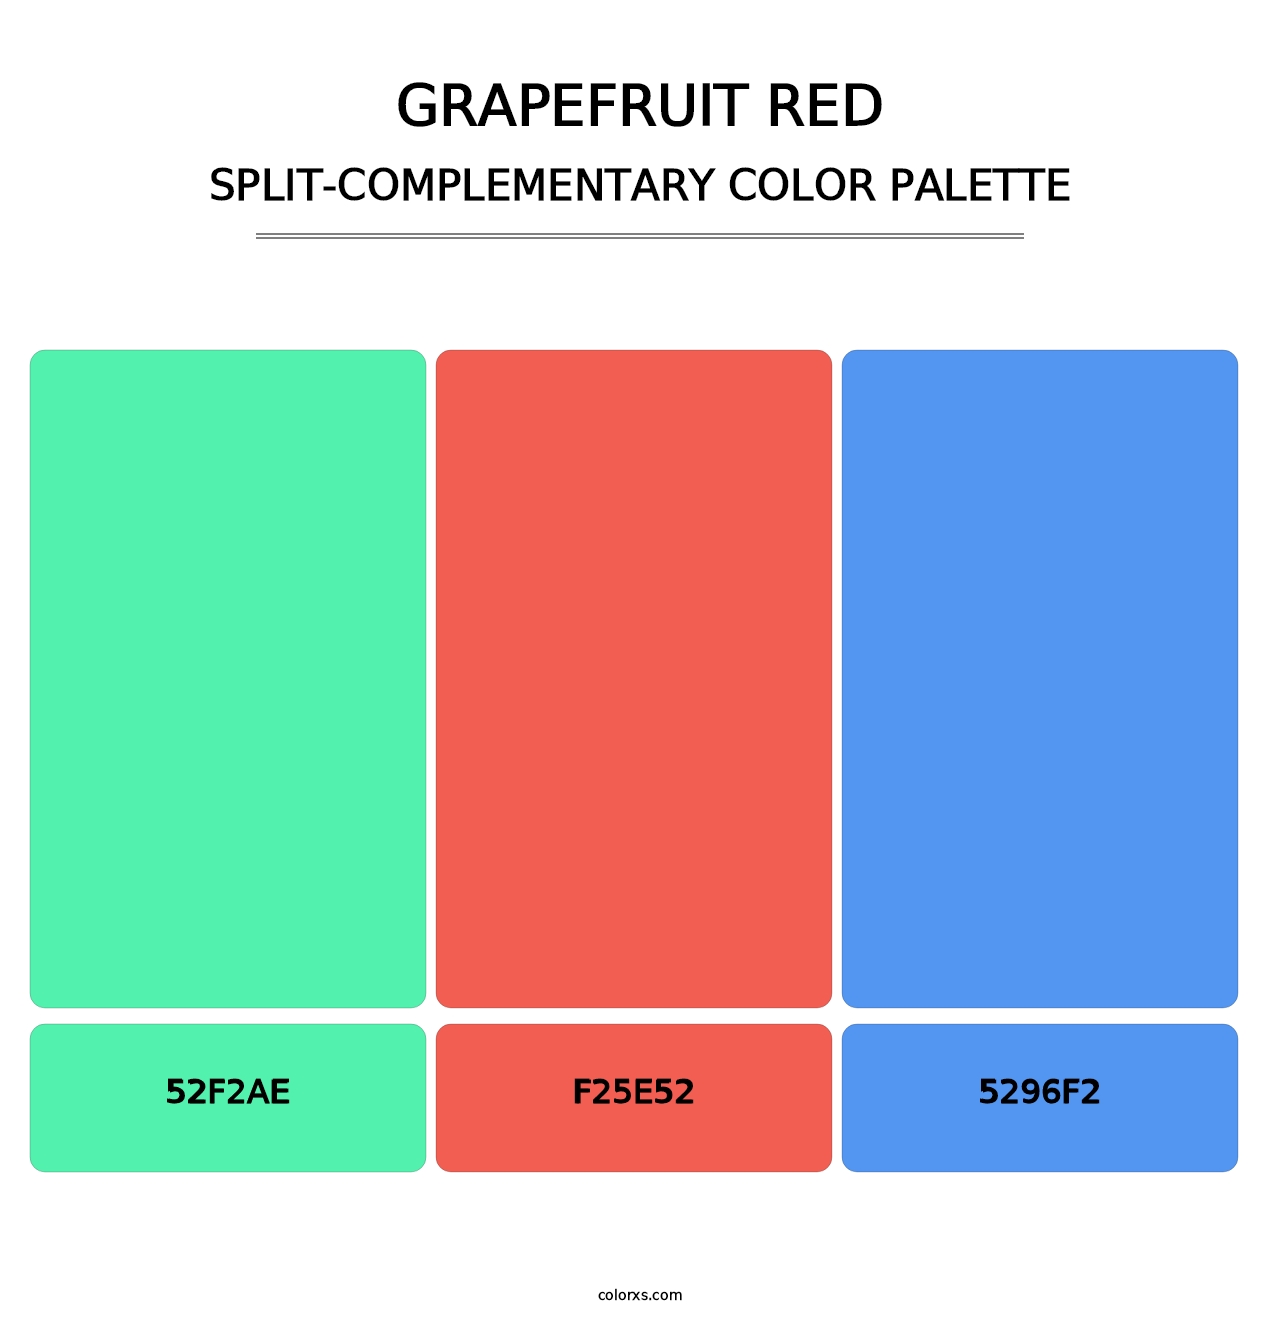 Grapefruit Red - Split-Complementary Color Palette